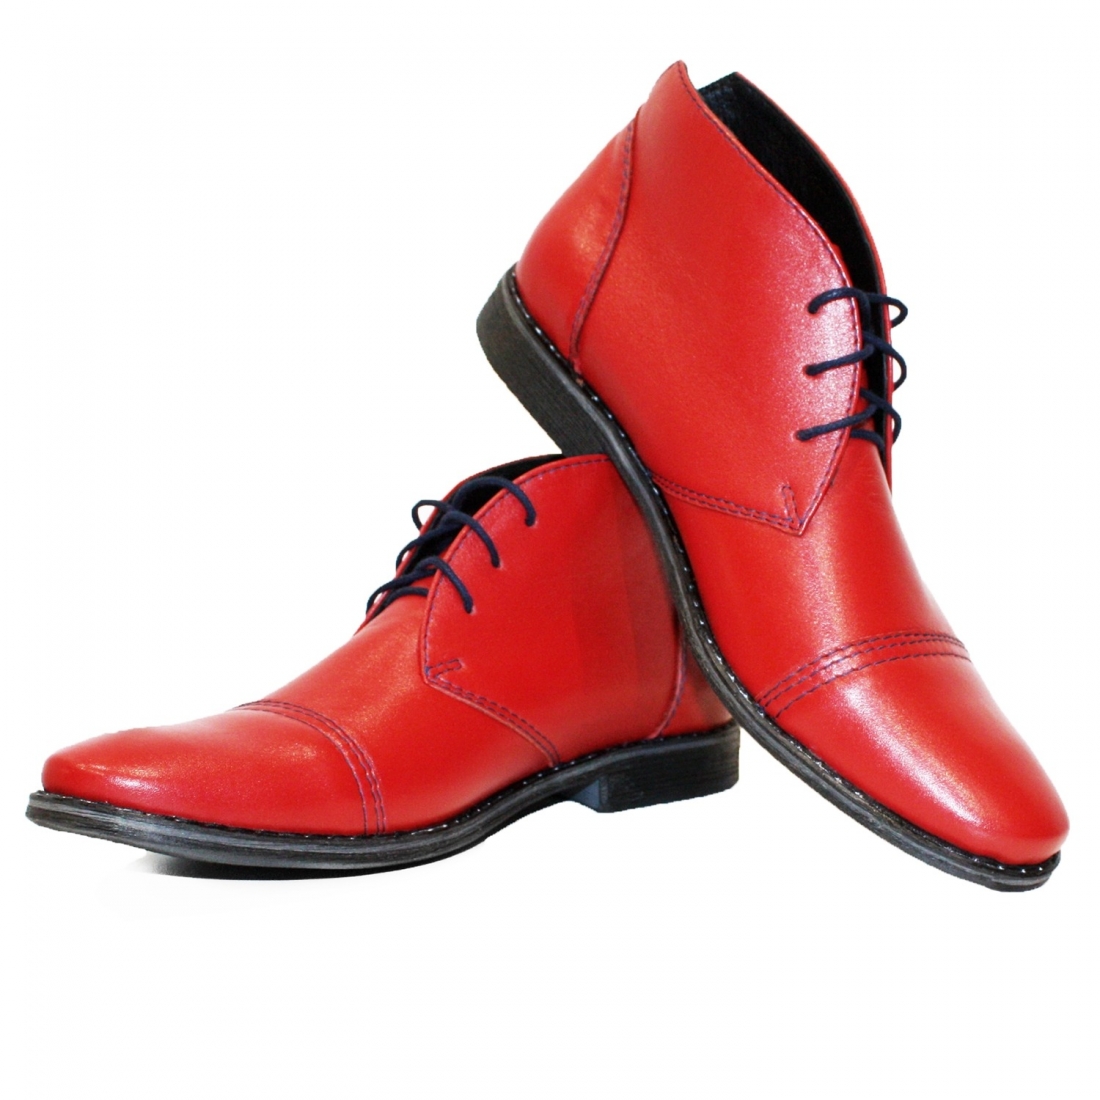 Modello Vurello - Buty Chukka - Handmade Colorful Italian Leather Shoes